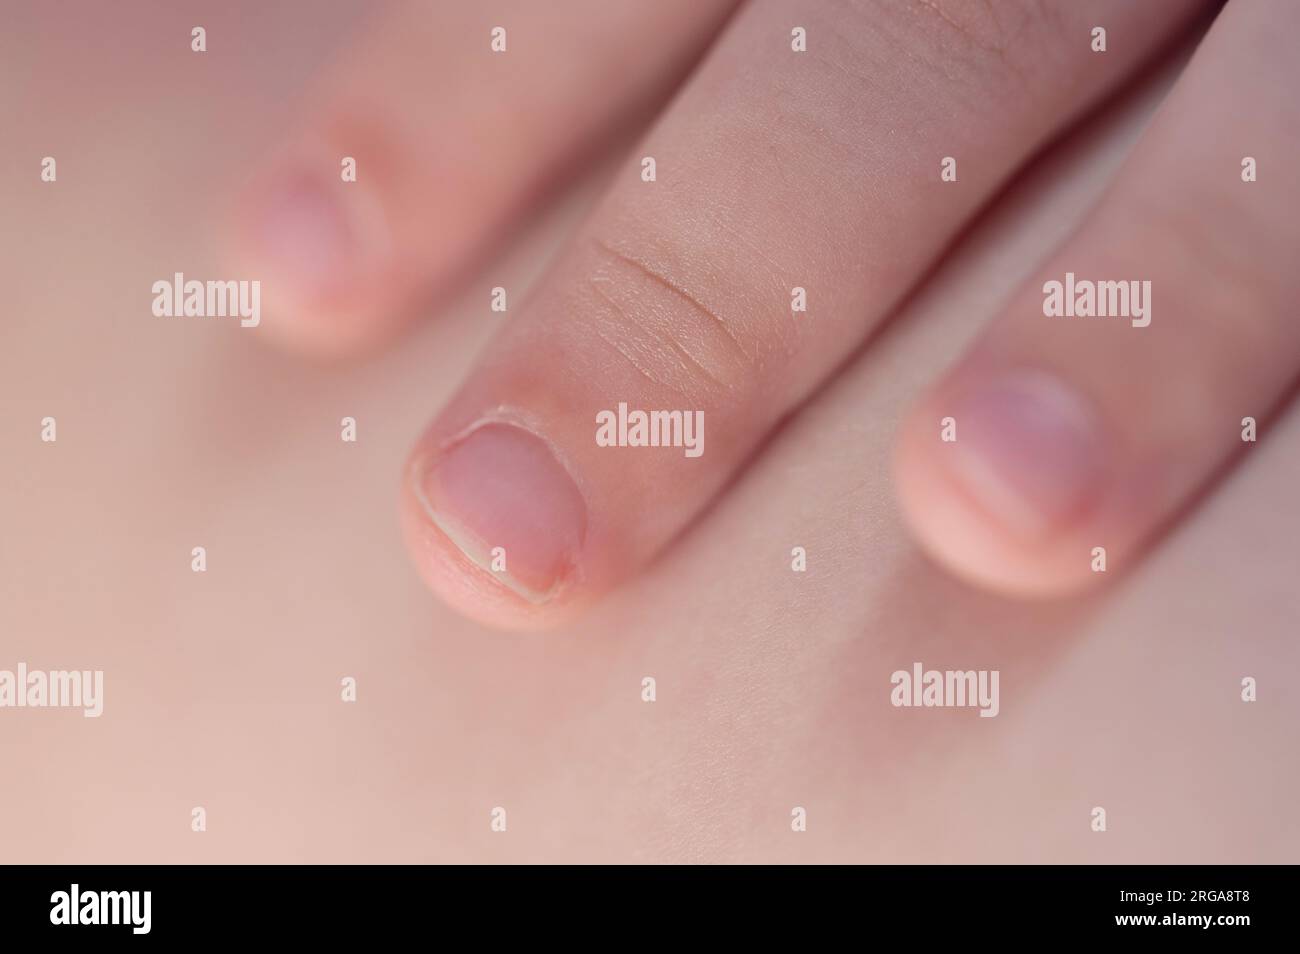 beauty tips: amazing home remedies to get rid of peeling cuticles during  winters skin peeling around nails Tips for Hangnails nakhun ke paas ki  khaal nikalne ke upay in hindi - सर्दियों